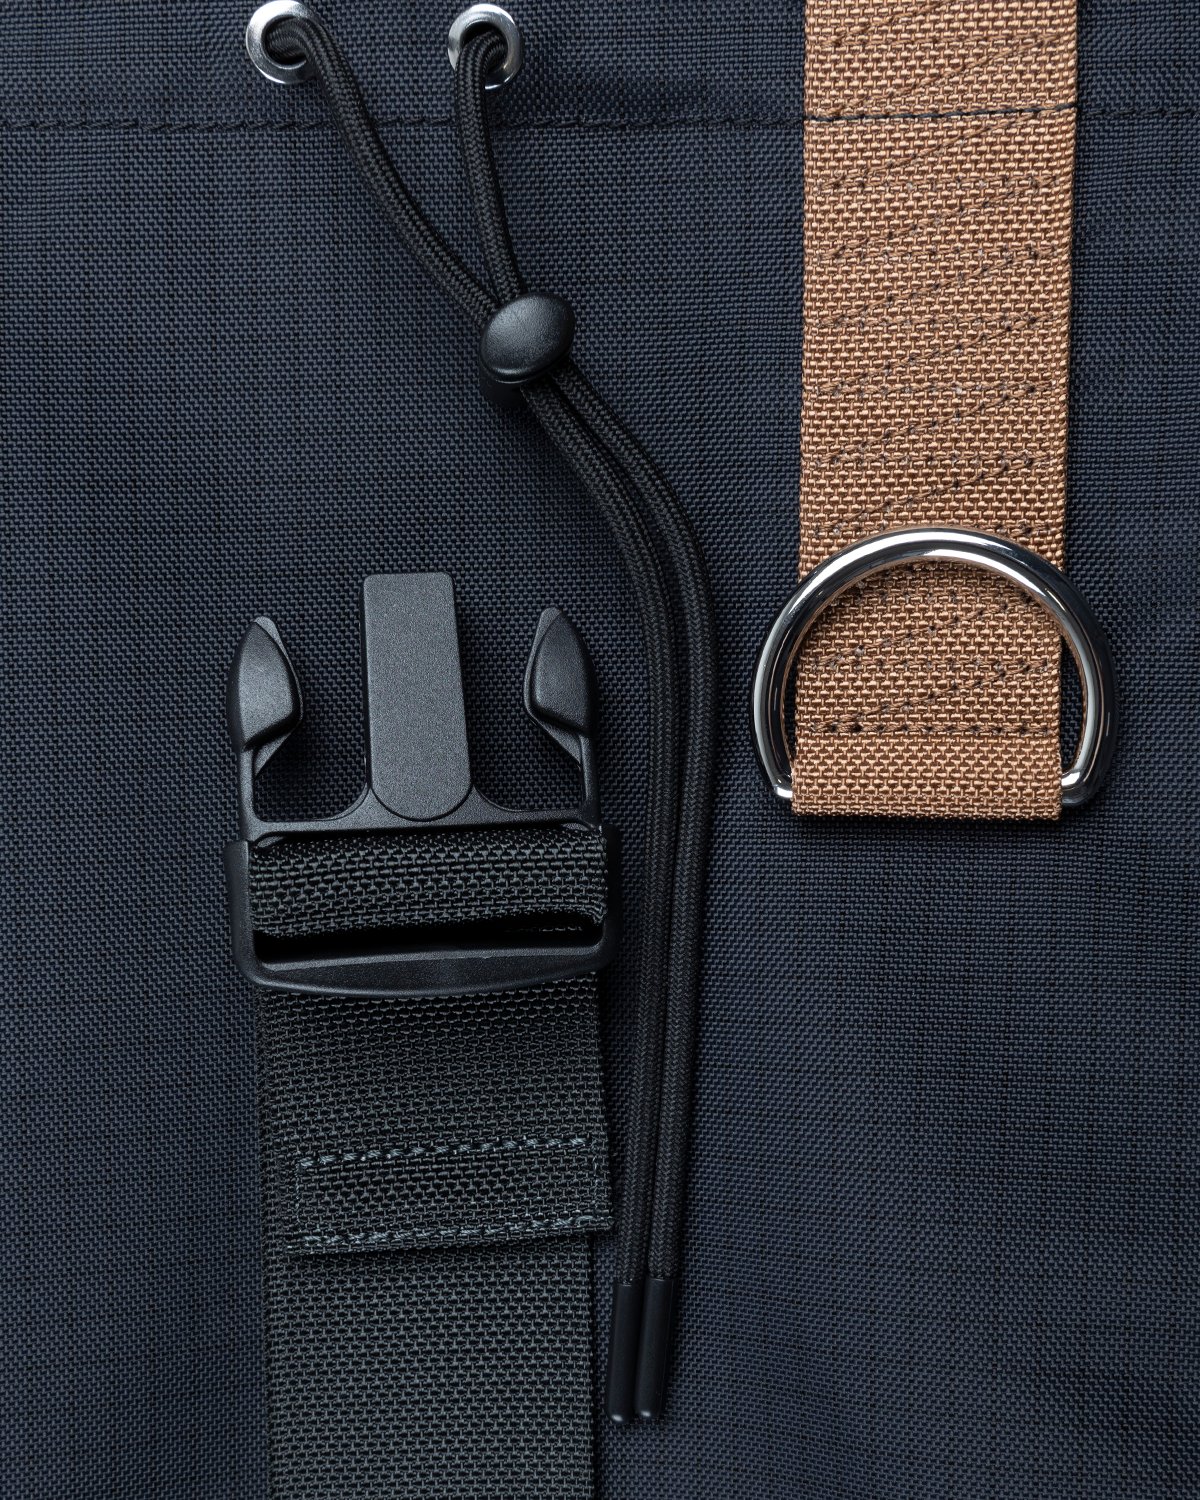 Acne Studios - Ripstop Nylon Backpack Black - Accessories - Black - Image 7